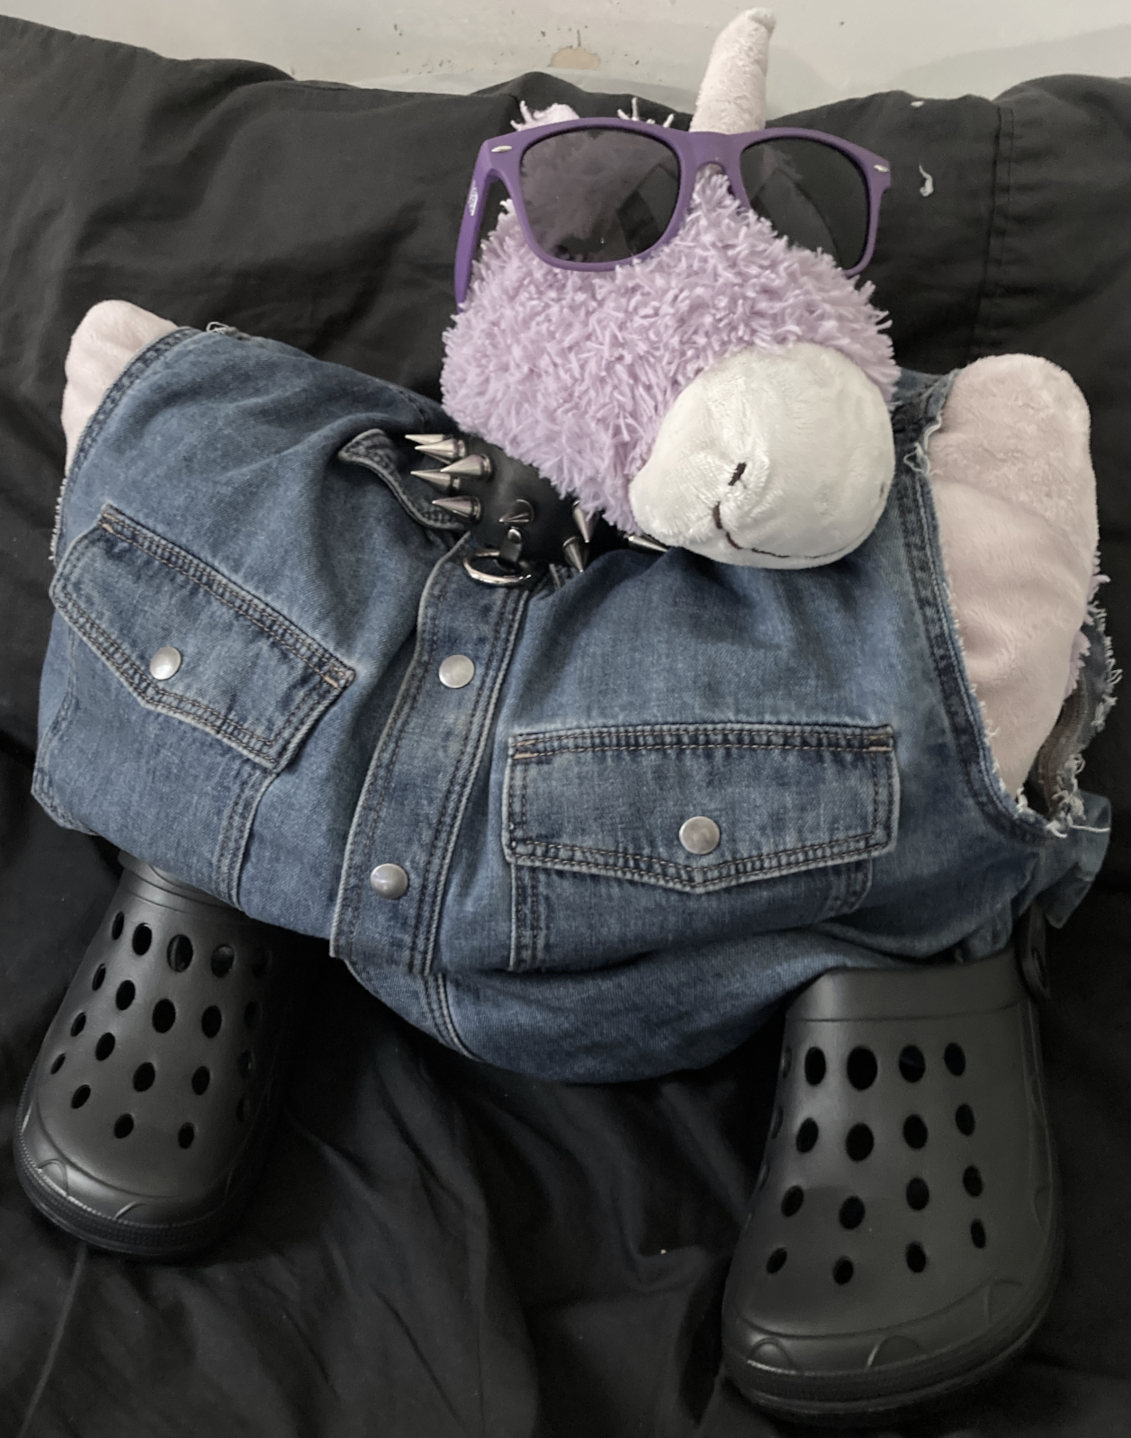 Purple unicorn plushy. Denim. black crocs, choker. Purple sunnies. Resting on black bed.